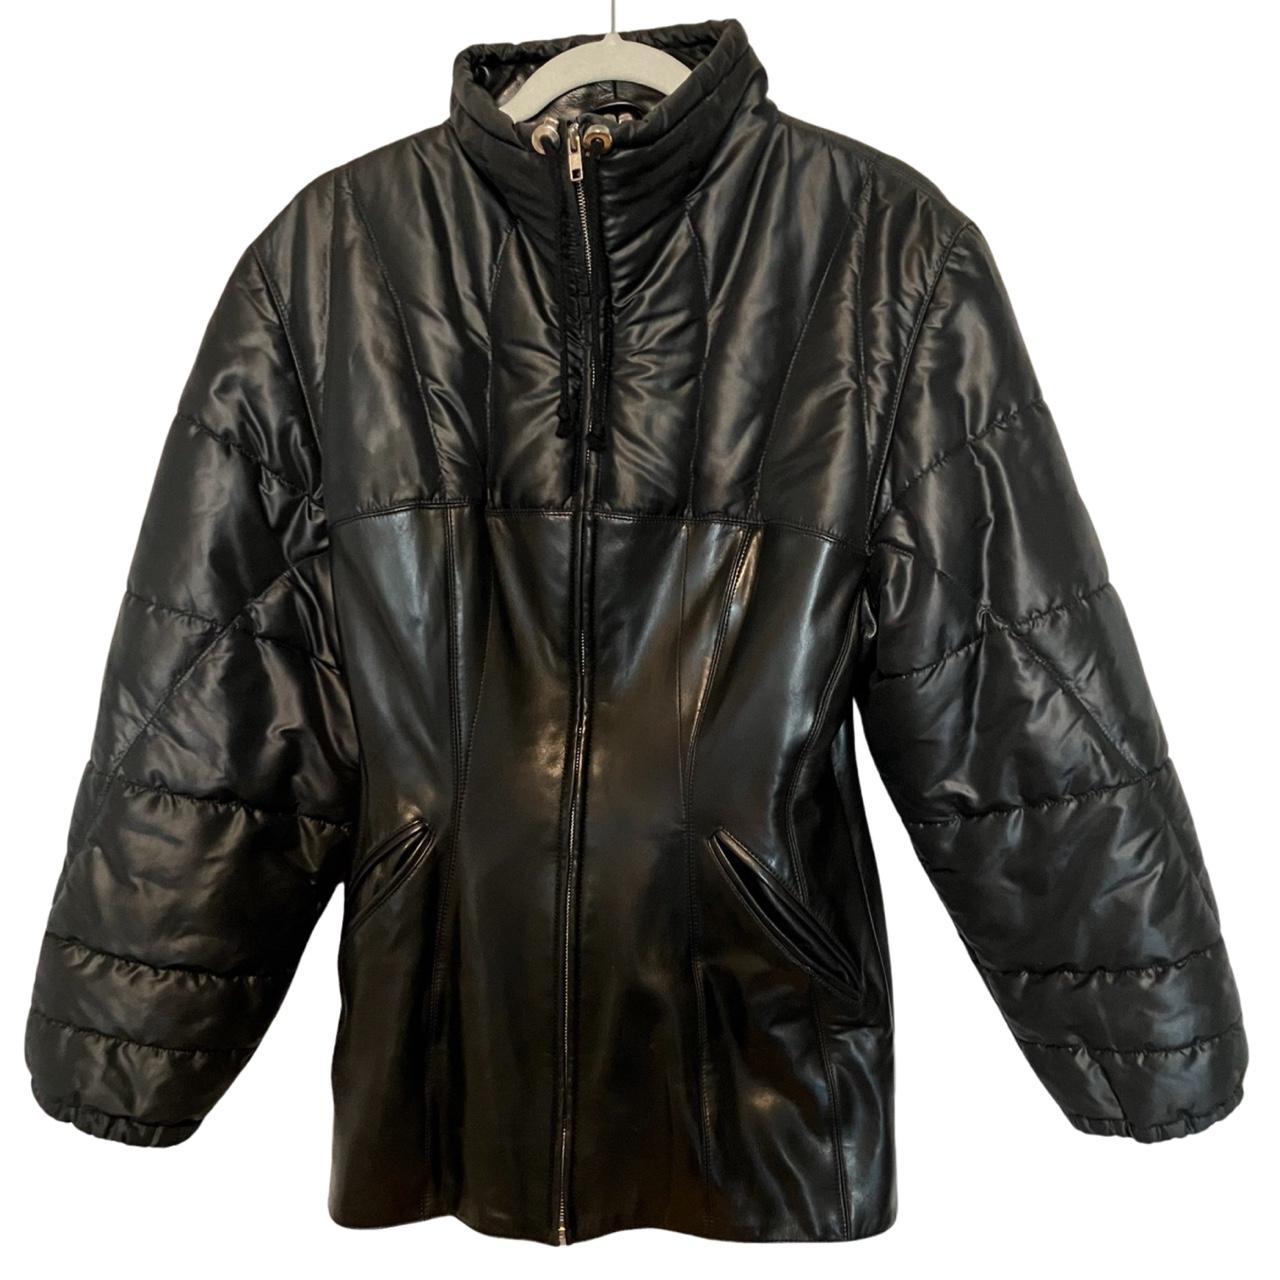 Claud Montana Pour Ideal jacket $1000 with fine... - Depop